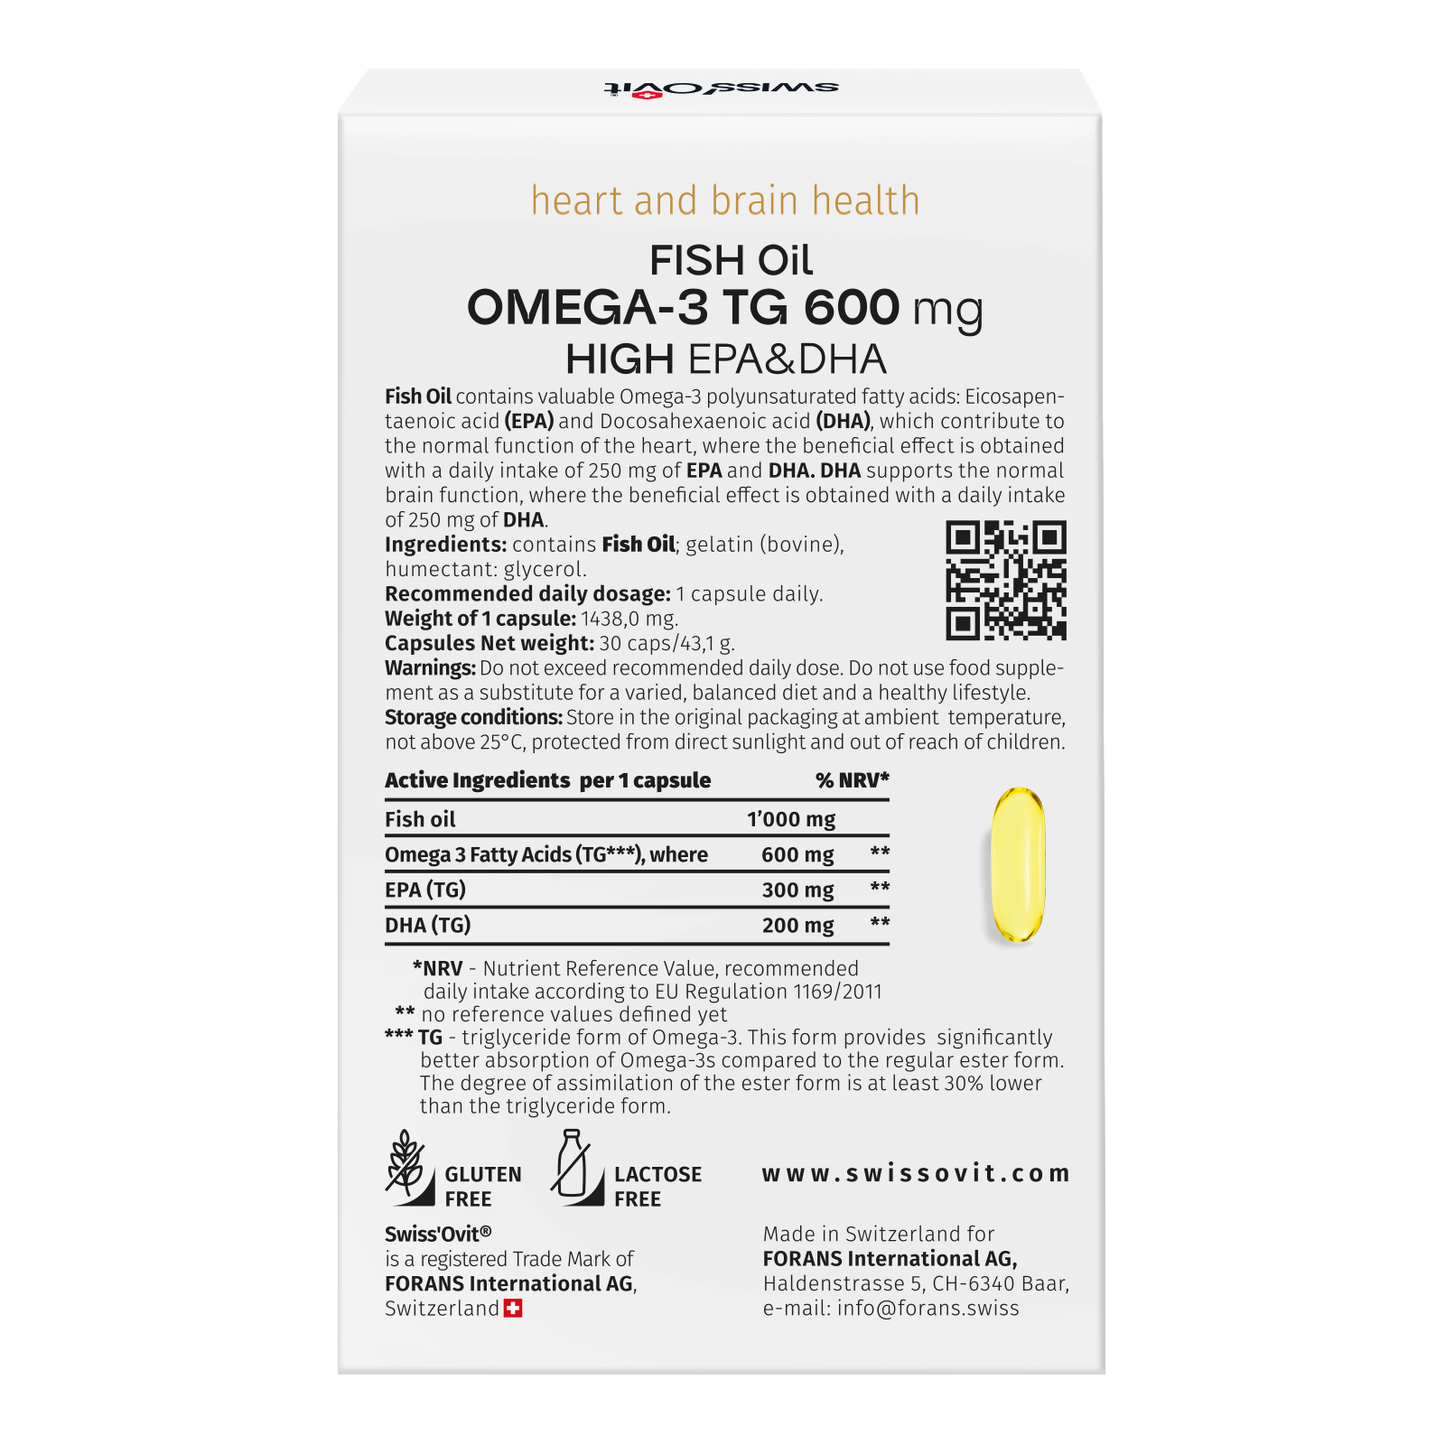 OMEGA-3 TG 600 mg Fish Oil